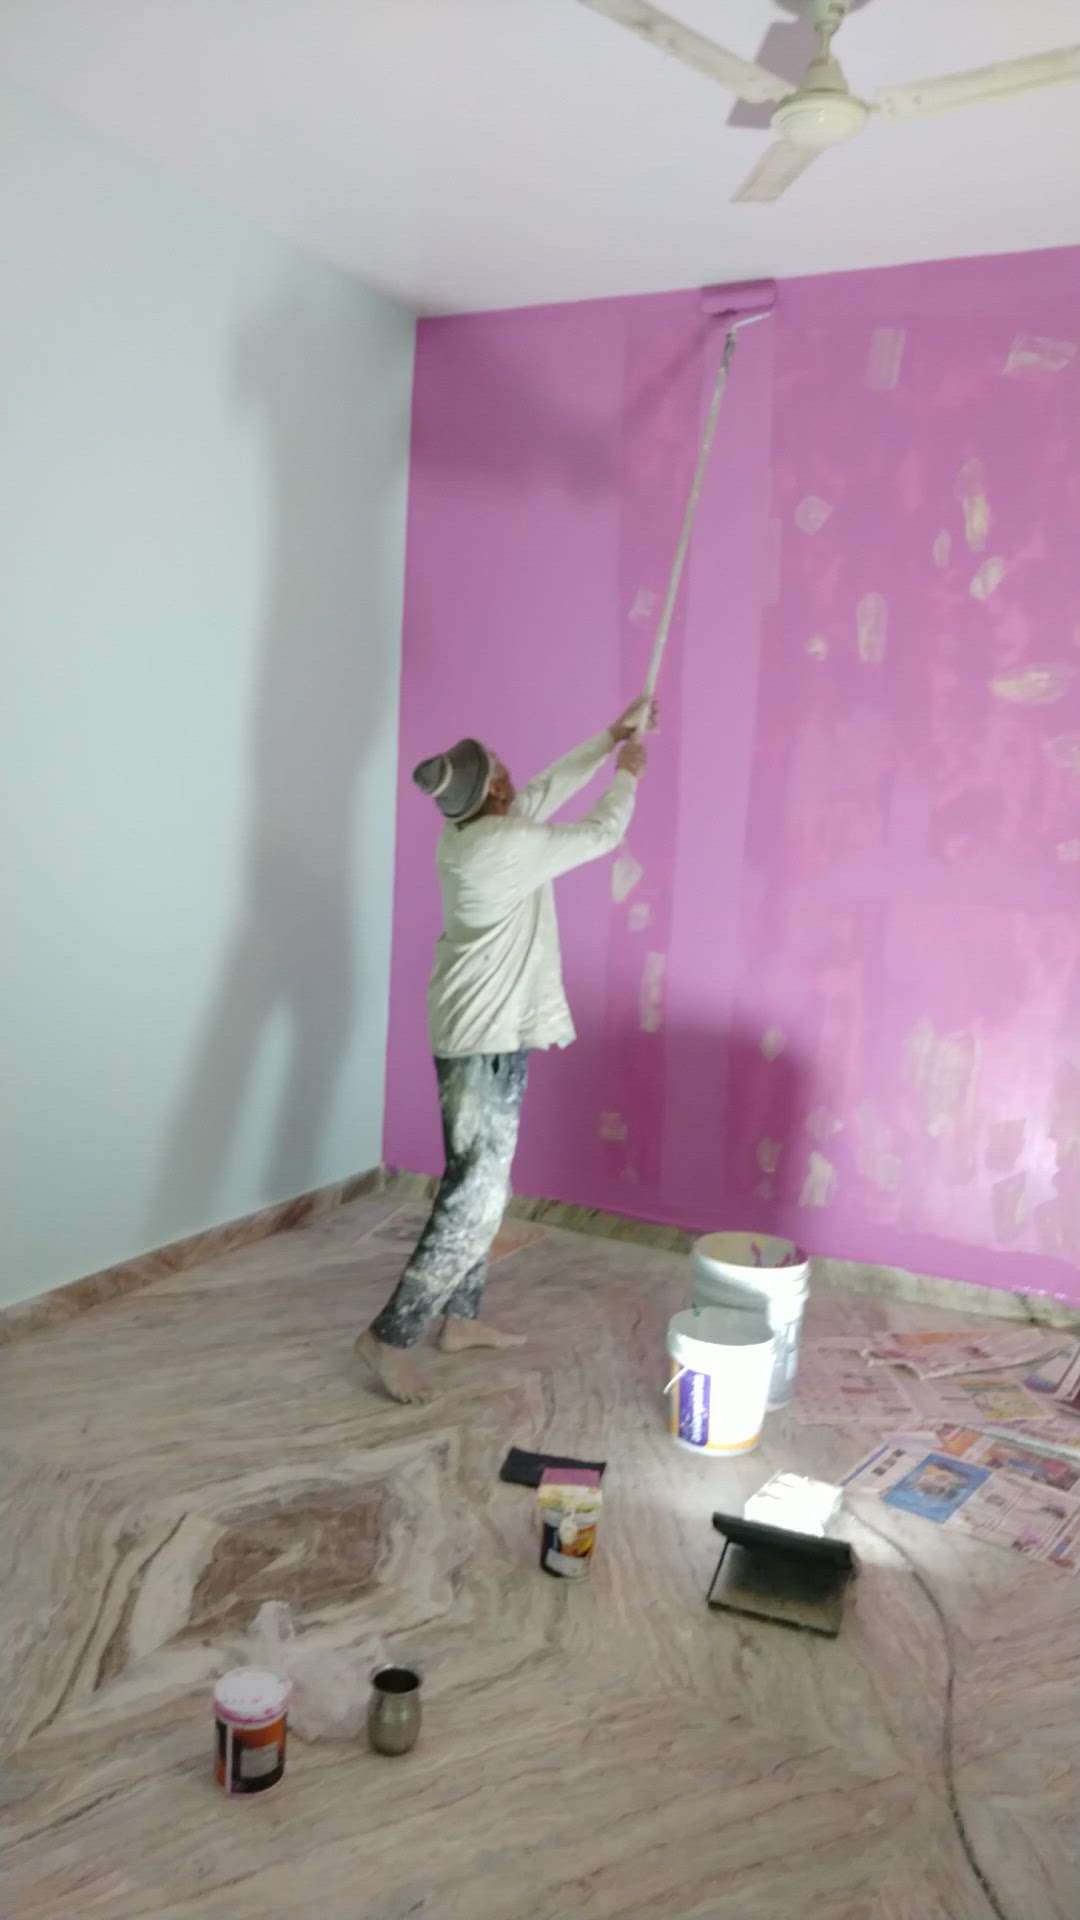 royal super luxary paint 8387031580 Rakesh ji jaipur contact only good service  #asian  #Painter  #royalpaint  #wallpaintingideas  #HomeDecor  #housepainting  #flatpaintg  #paintingservices  #rajasthani  #jaipurcity